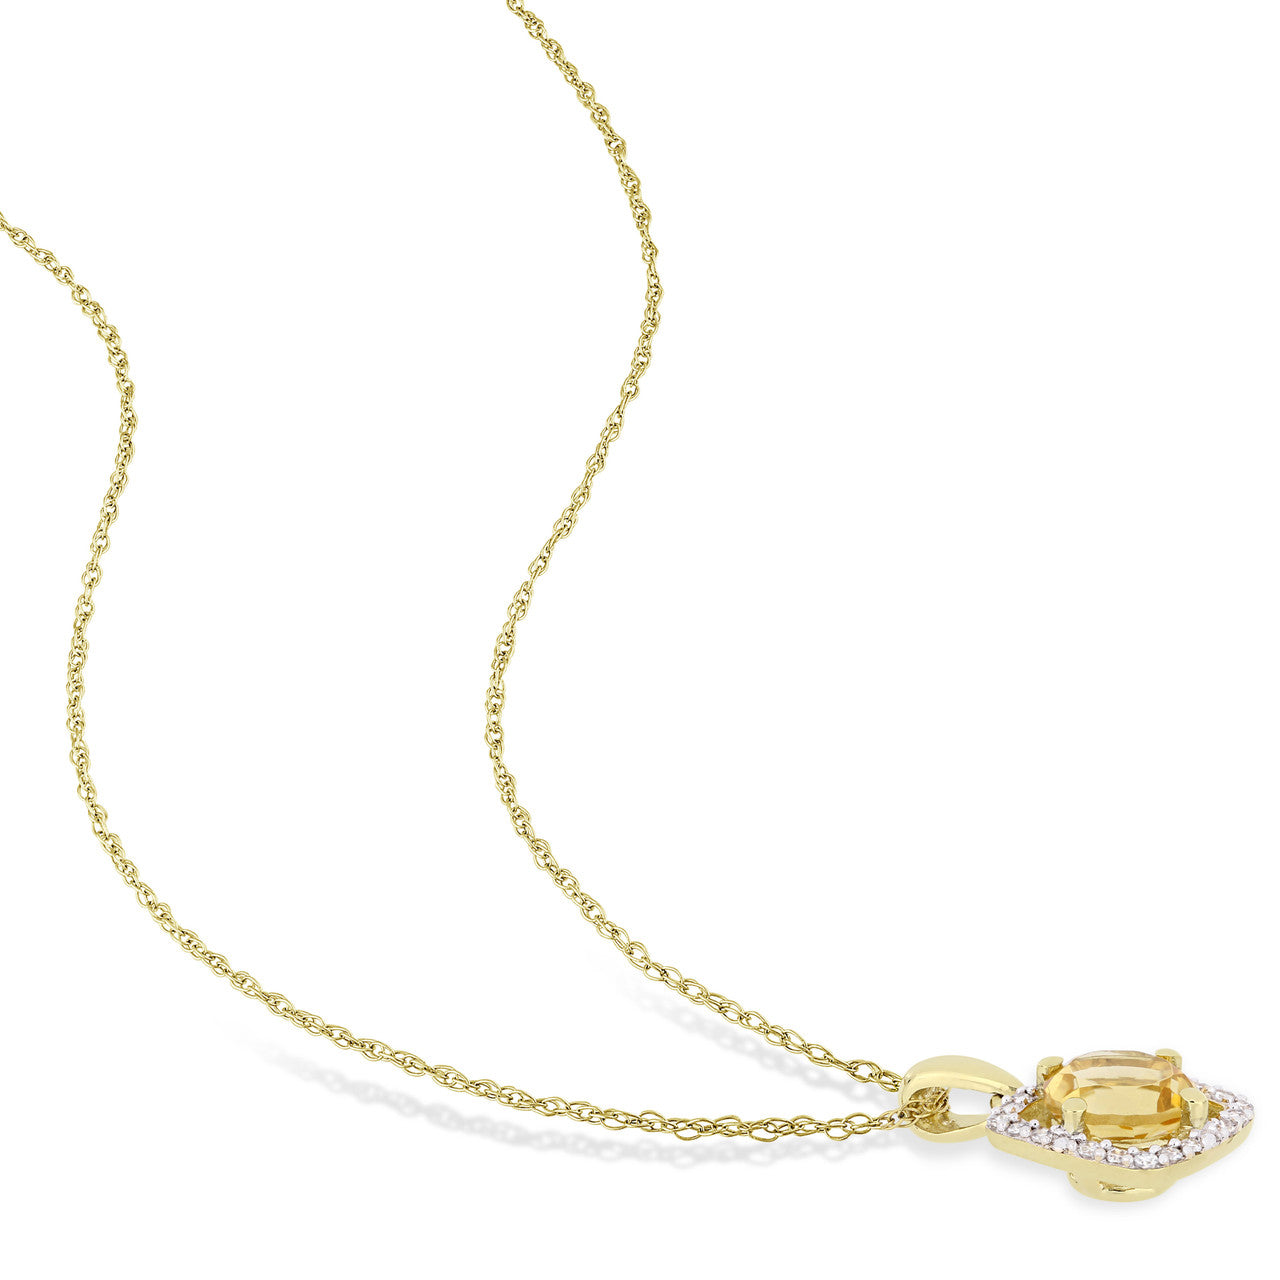 Ice Jewellery 1/10 CT Diamond TW & 3/4 CT Citrine Pendant With Chain 10k Yellow Gold GH I2;I3 - 75000004077 | Ice Jewellery Australia